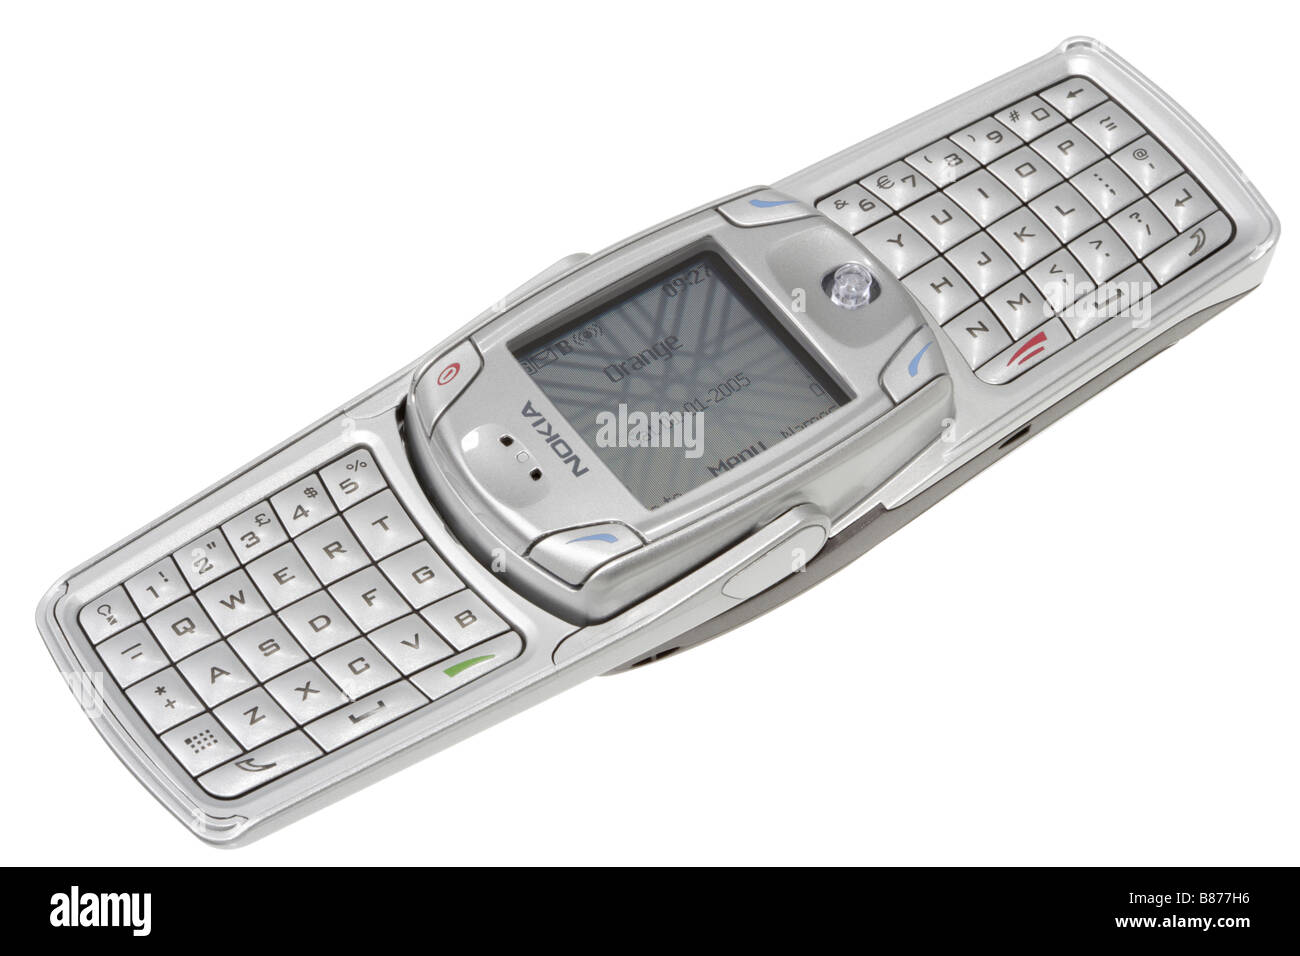 Nokia Mobiltelefon Handy und Tastatur Stockfotografie - Alamy